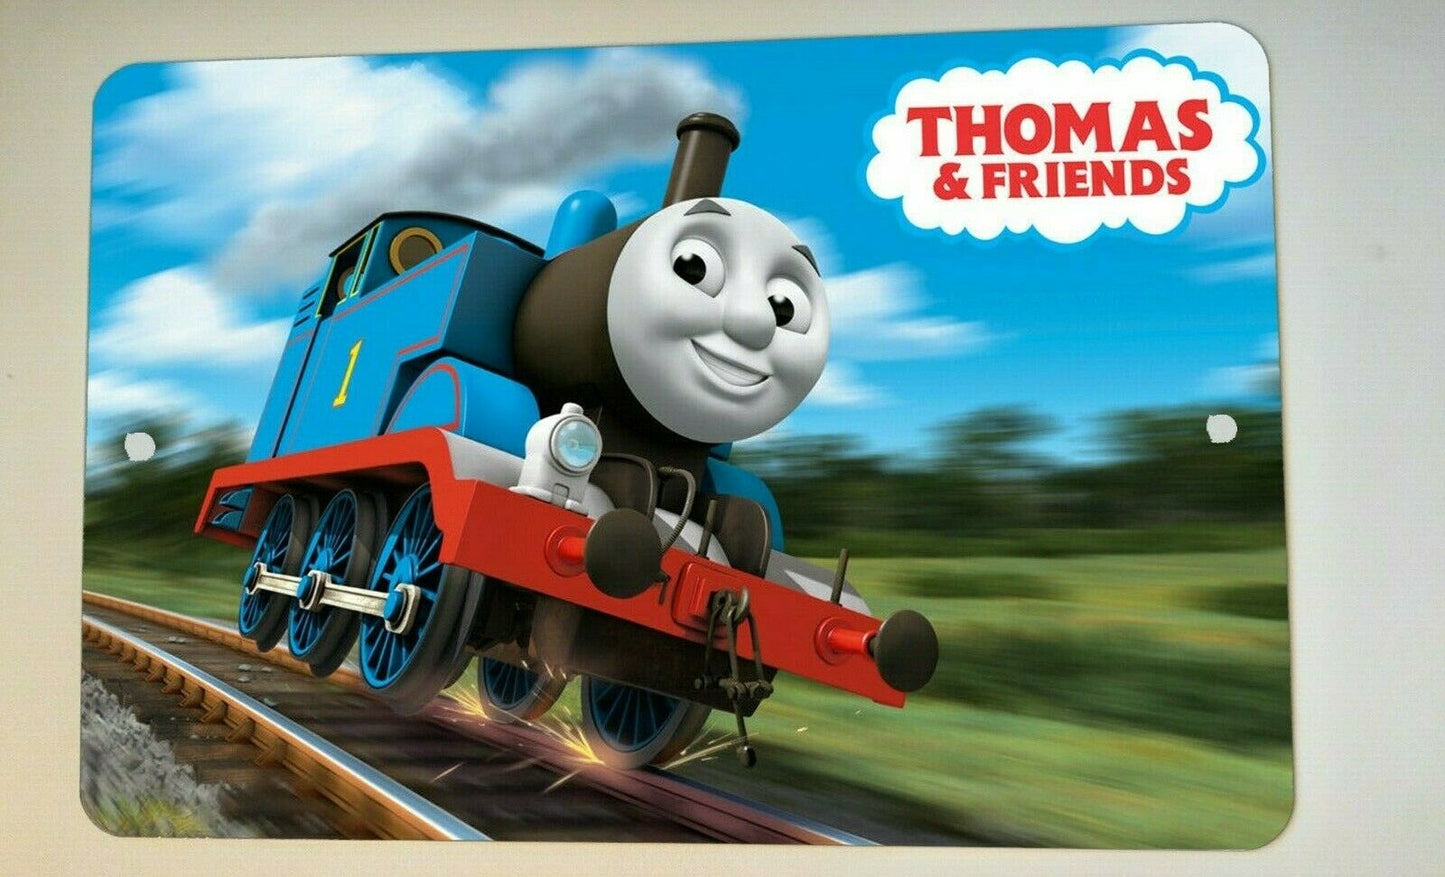 Thomas the Train 8x12 Metal Wall Sign